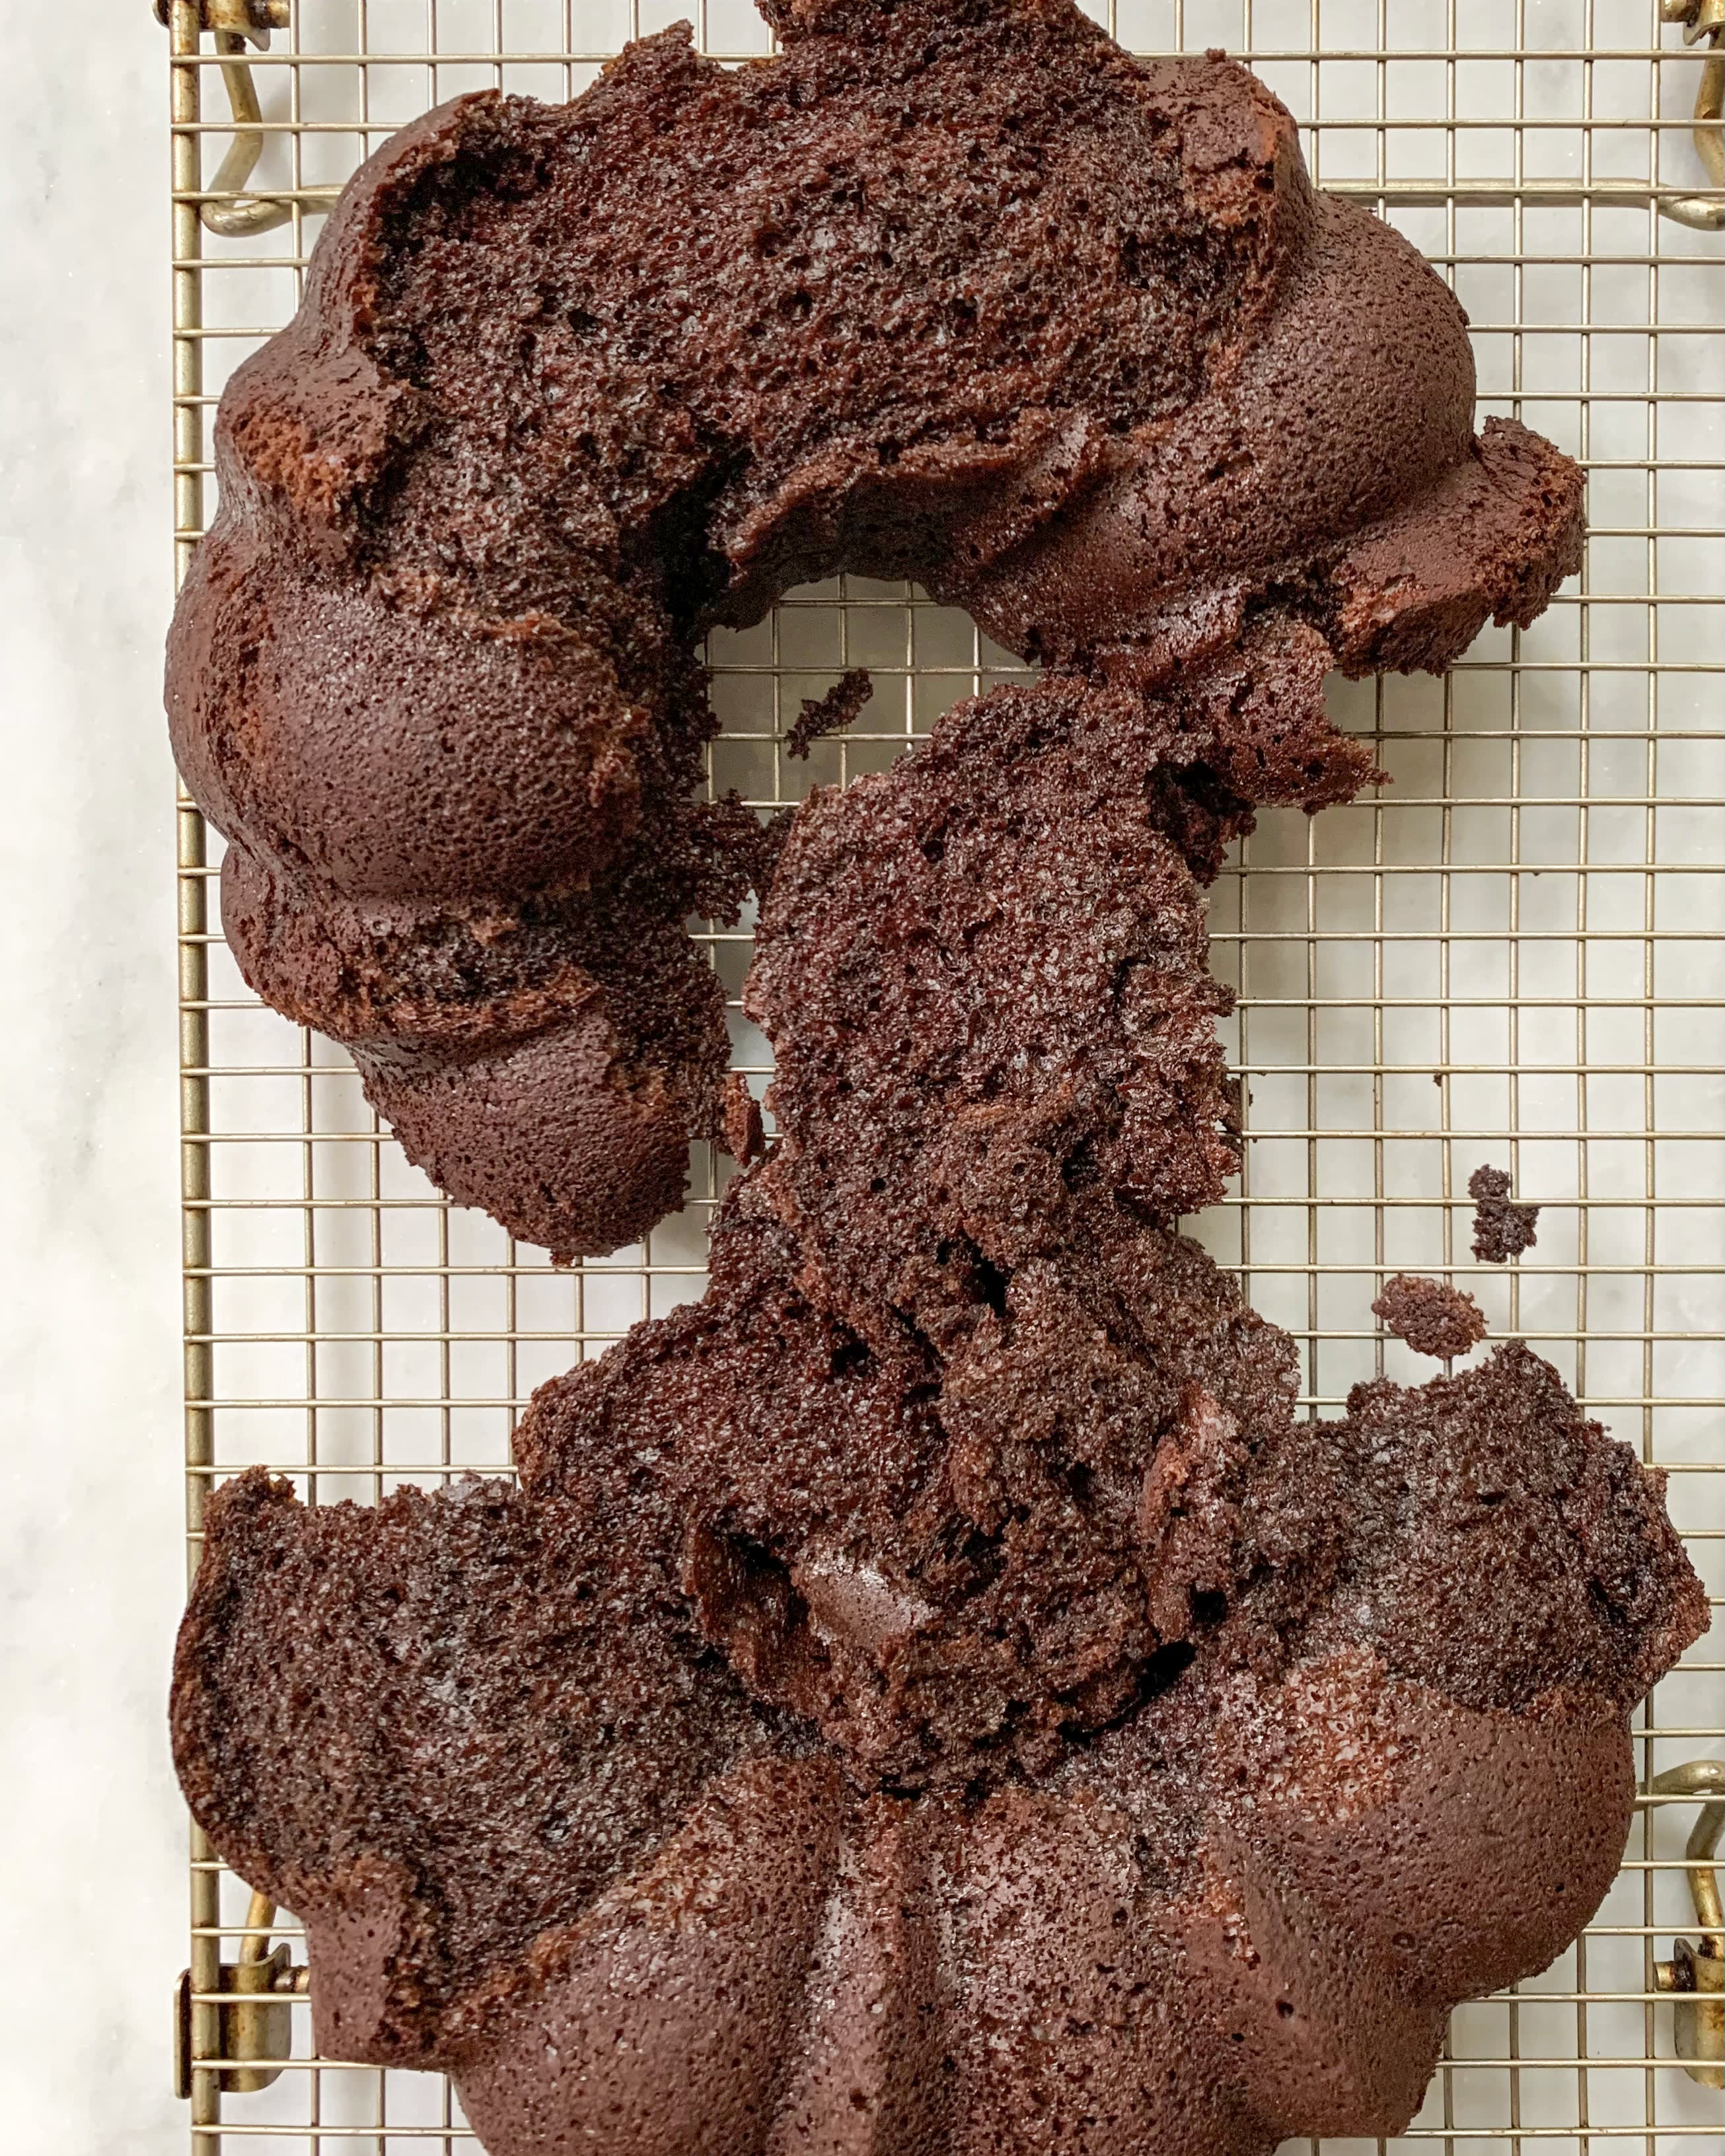 Black magic cake with chocolate coffee frosting - Recipe Petitchef